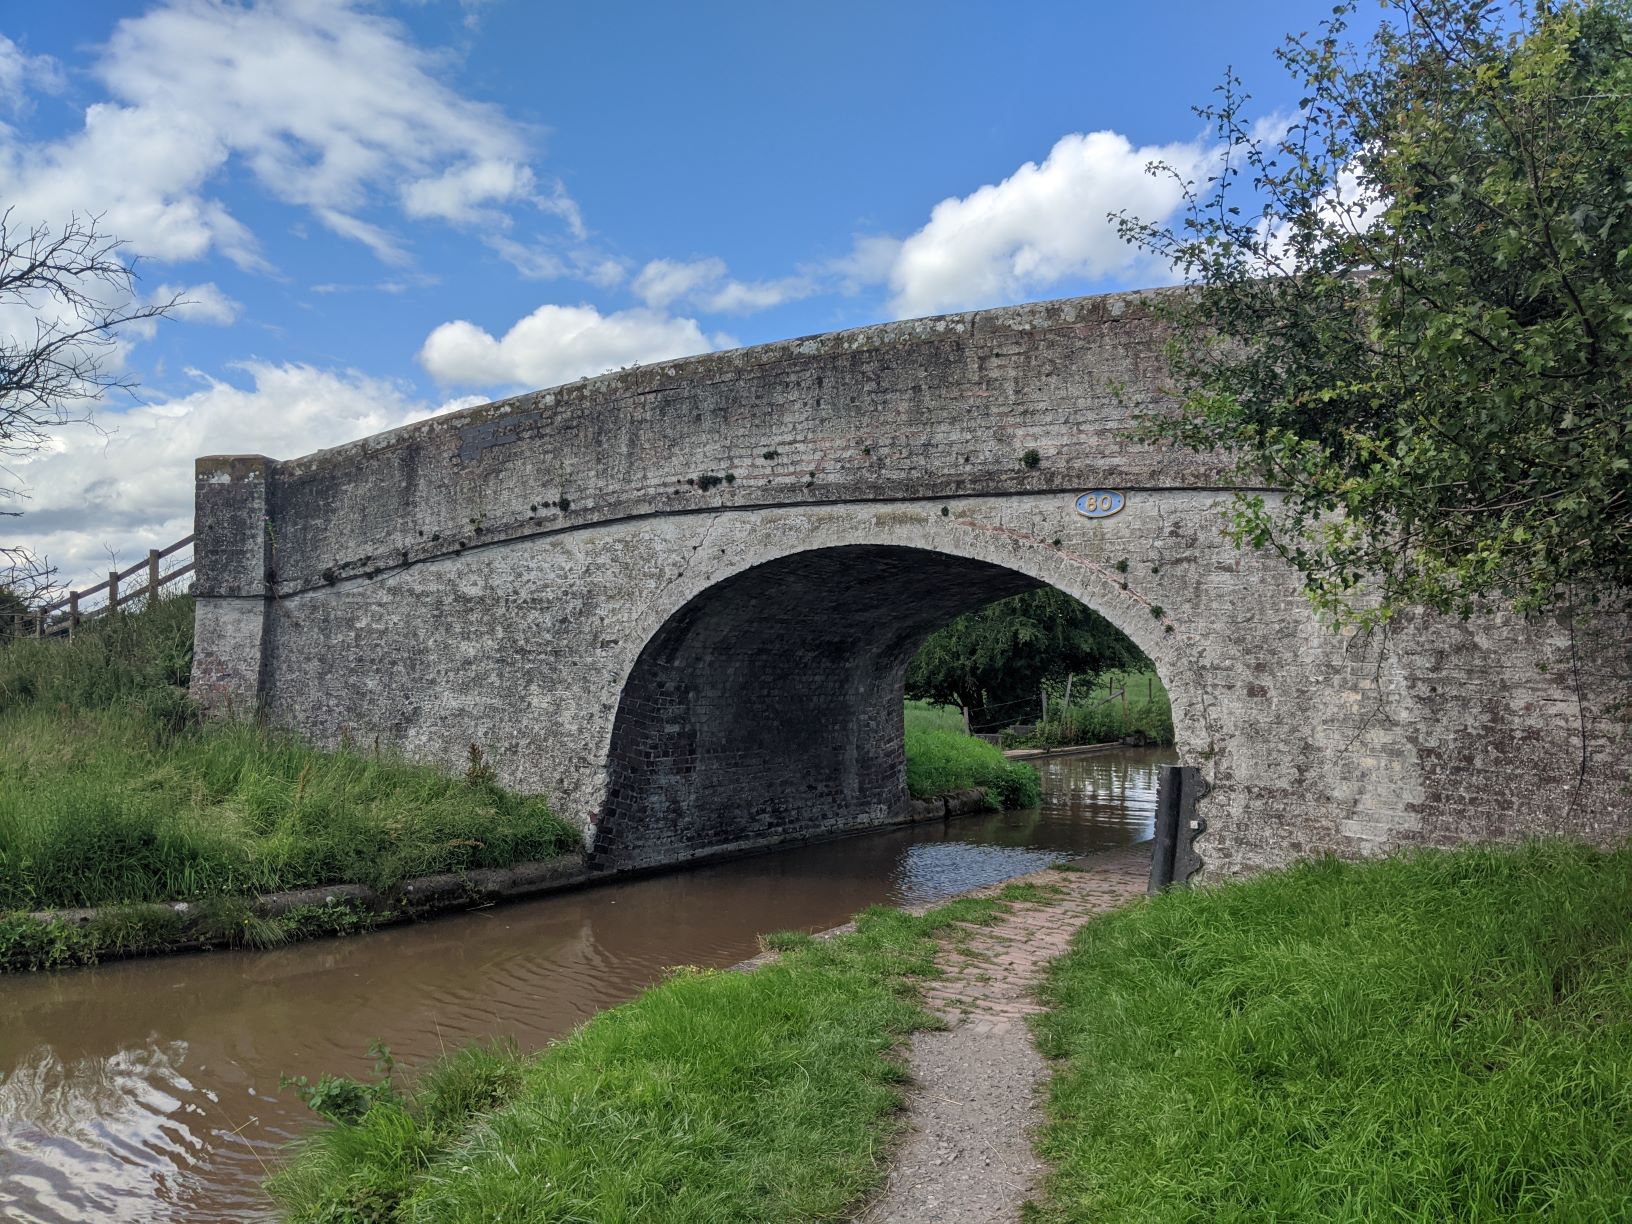 Bennet's bridge (Bridge 80), 11th July